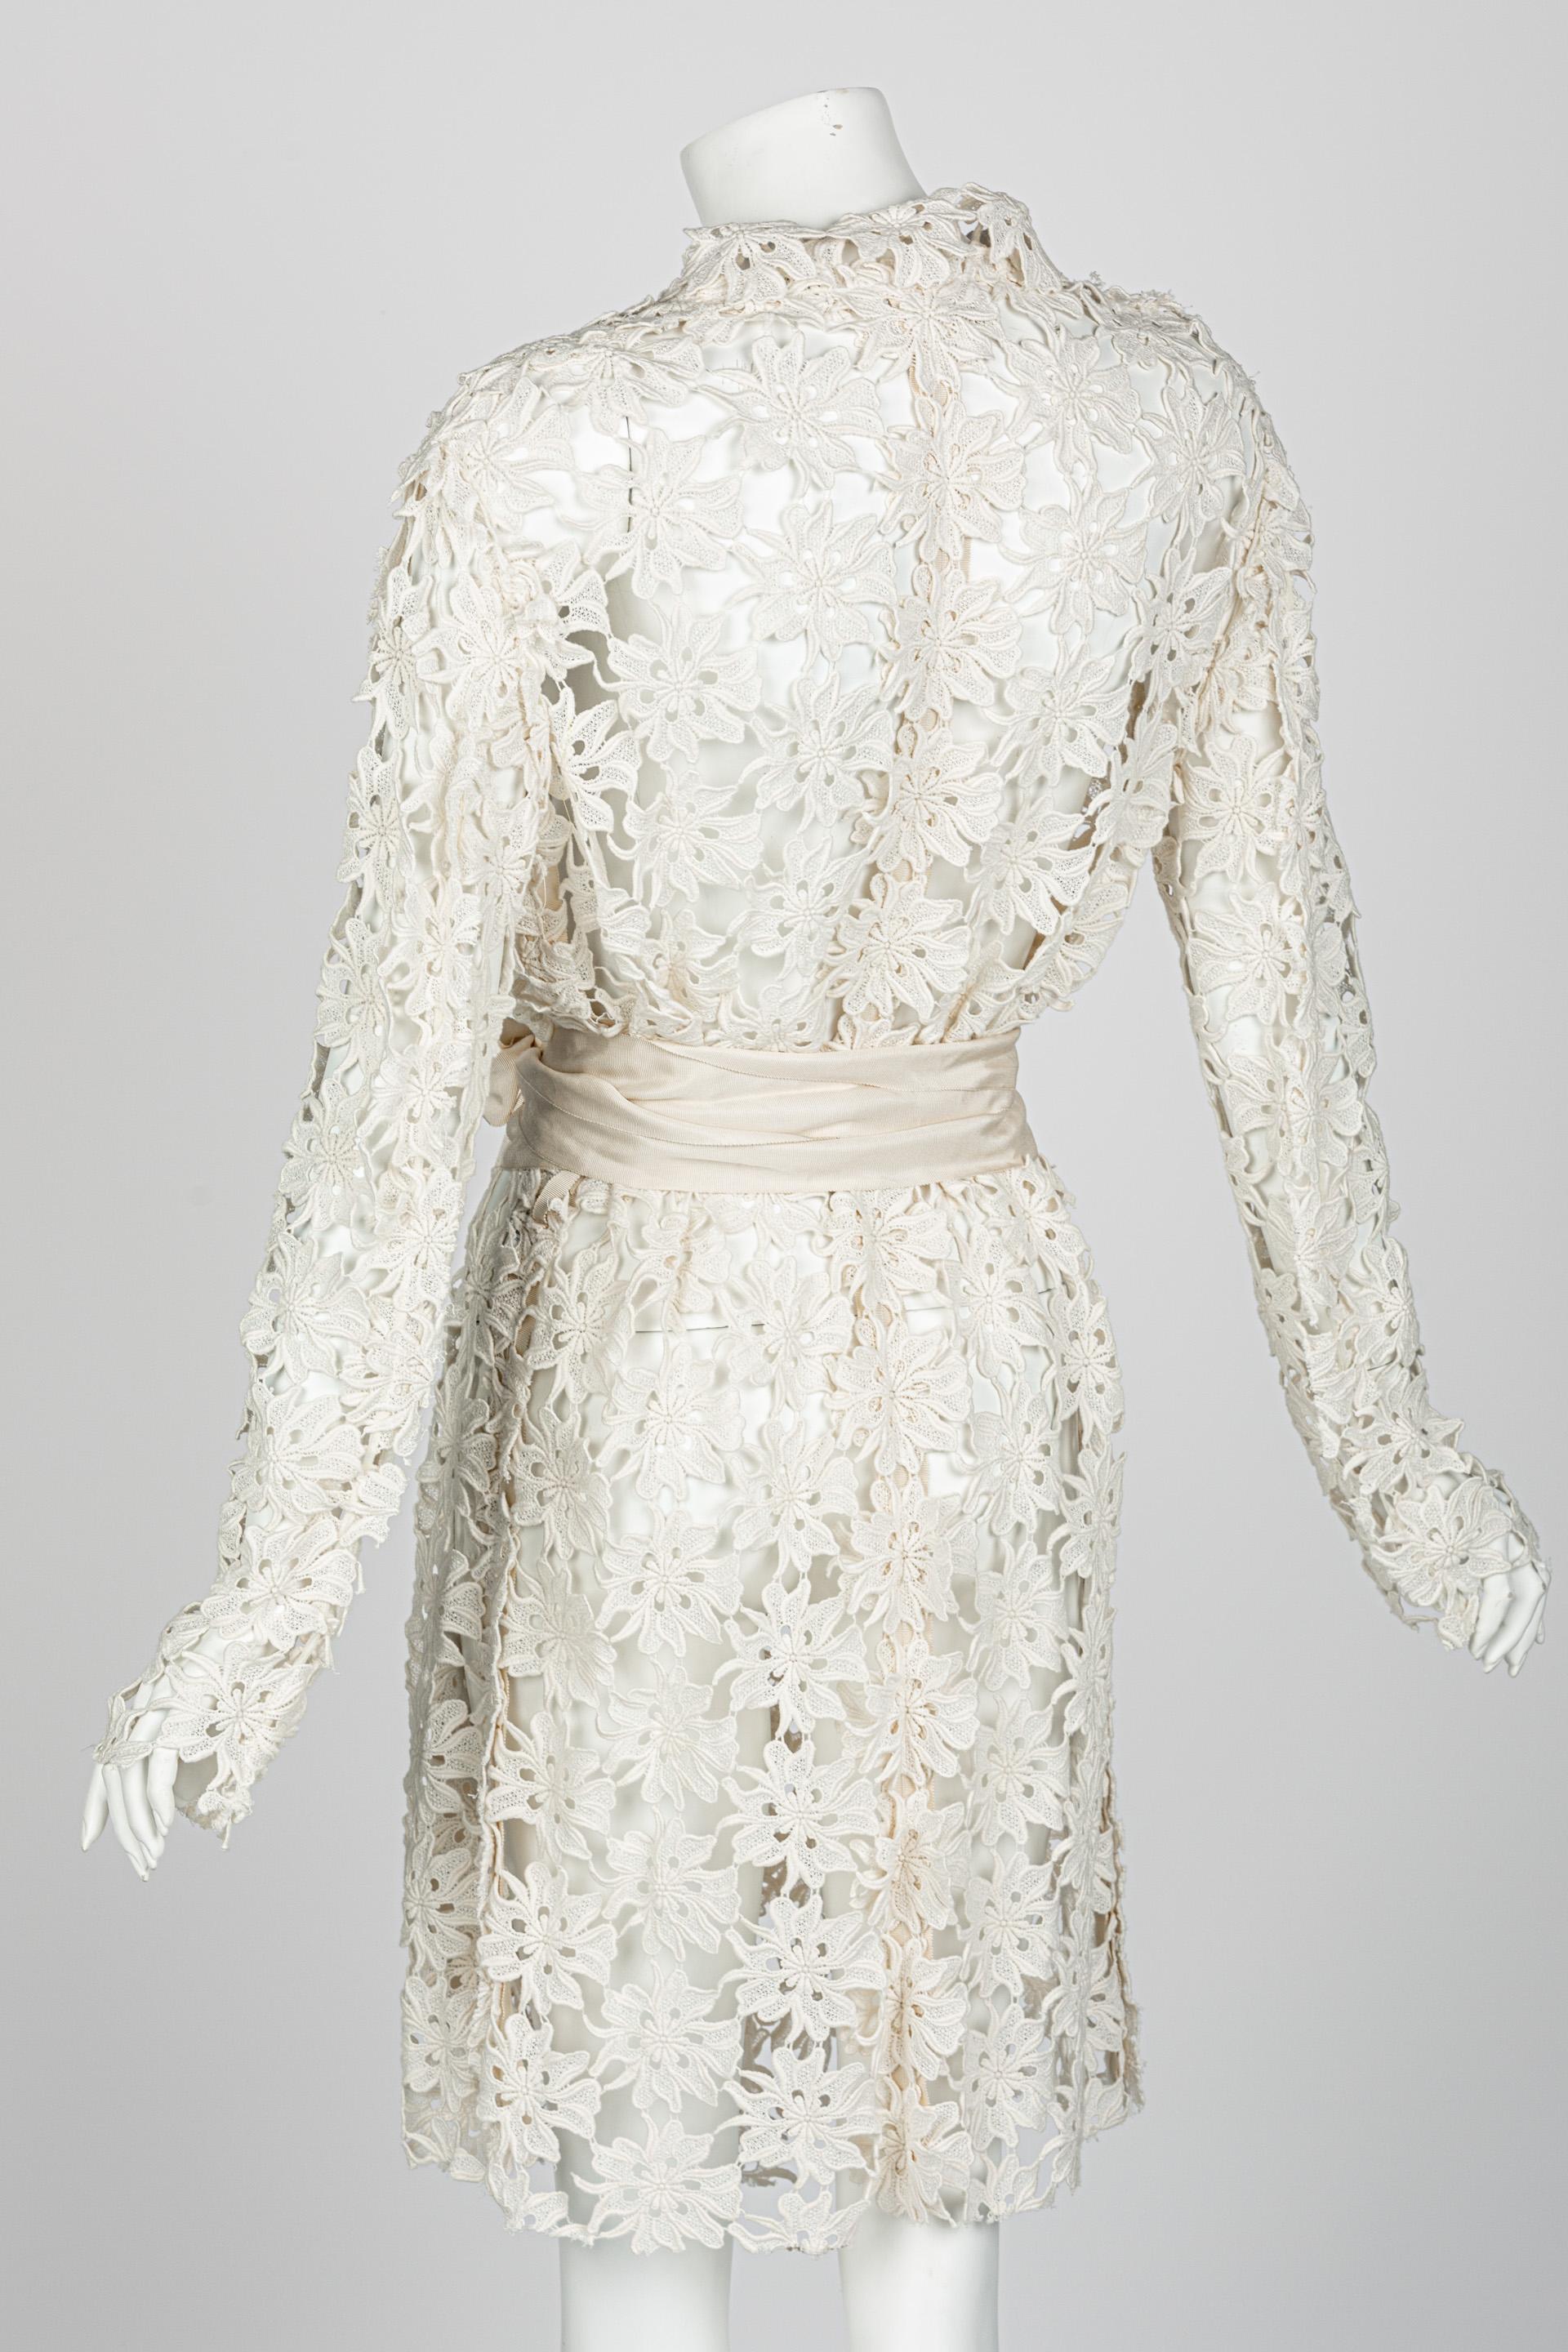 Gray Lanvin Alber Elbaz Collection Blanche Ivory Guipure Lace Coat 2013